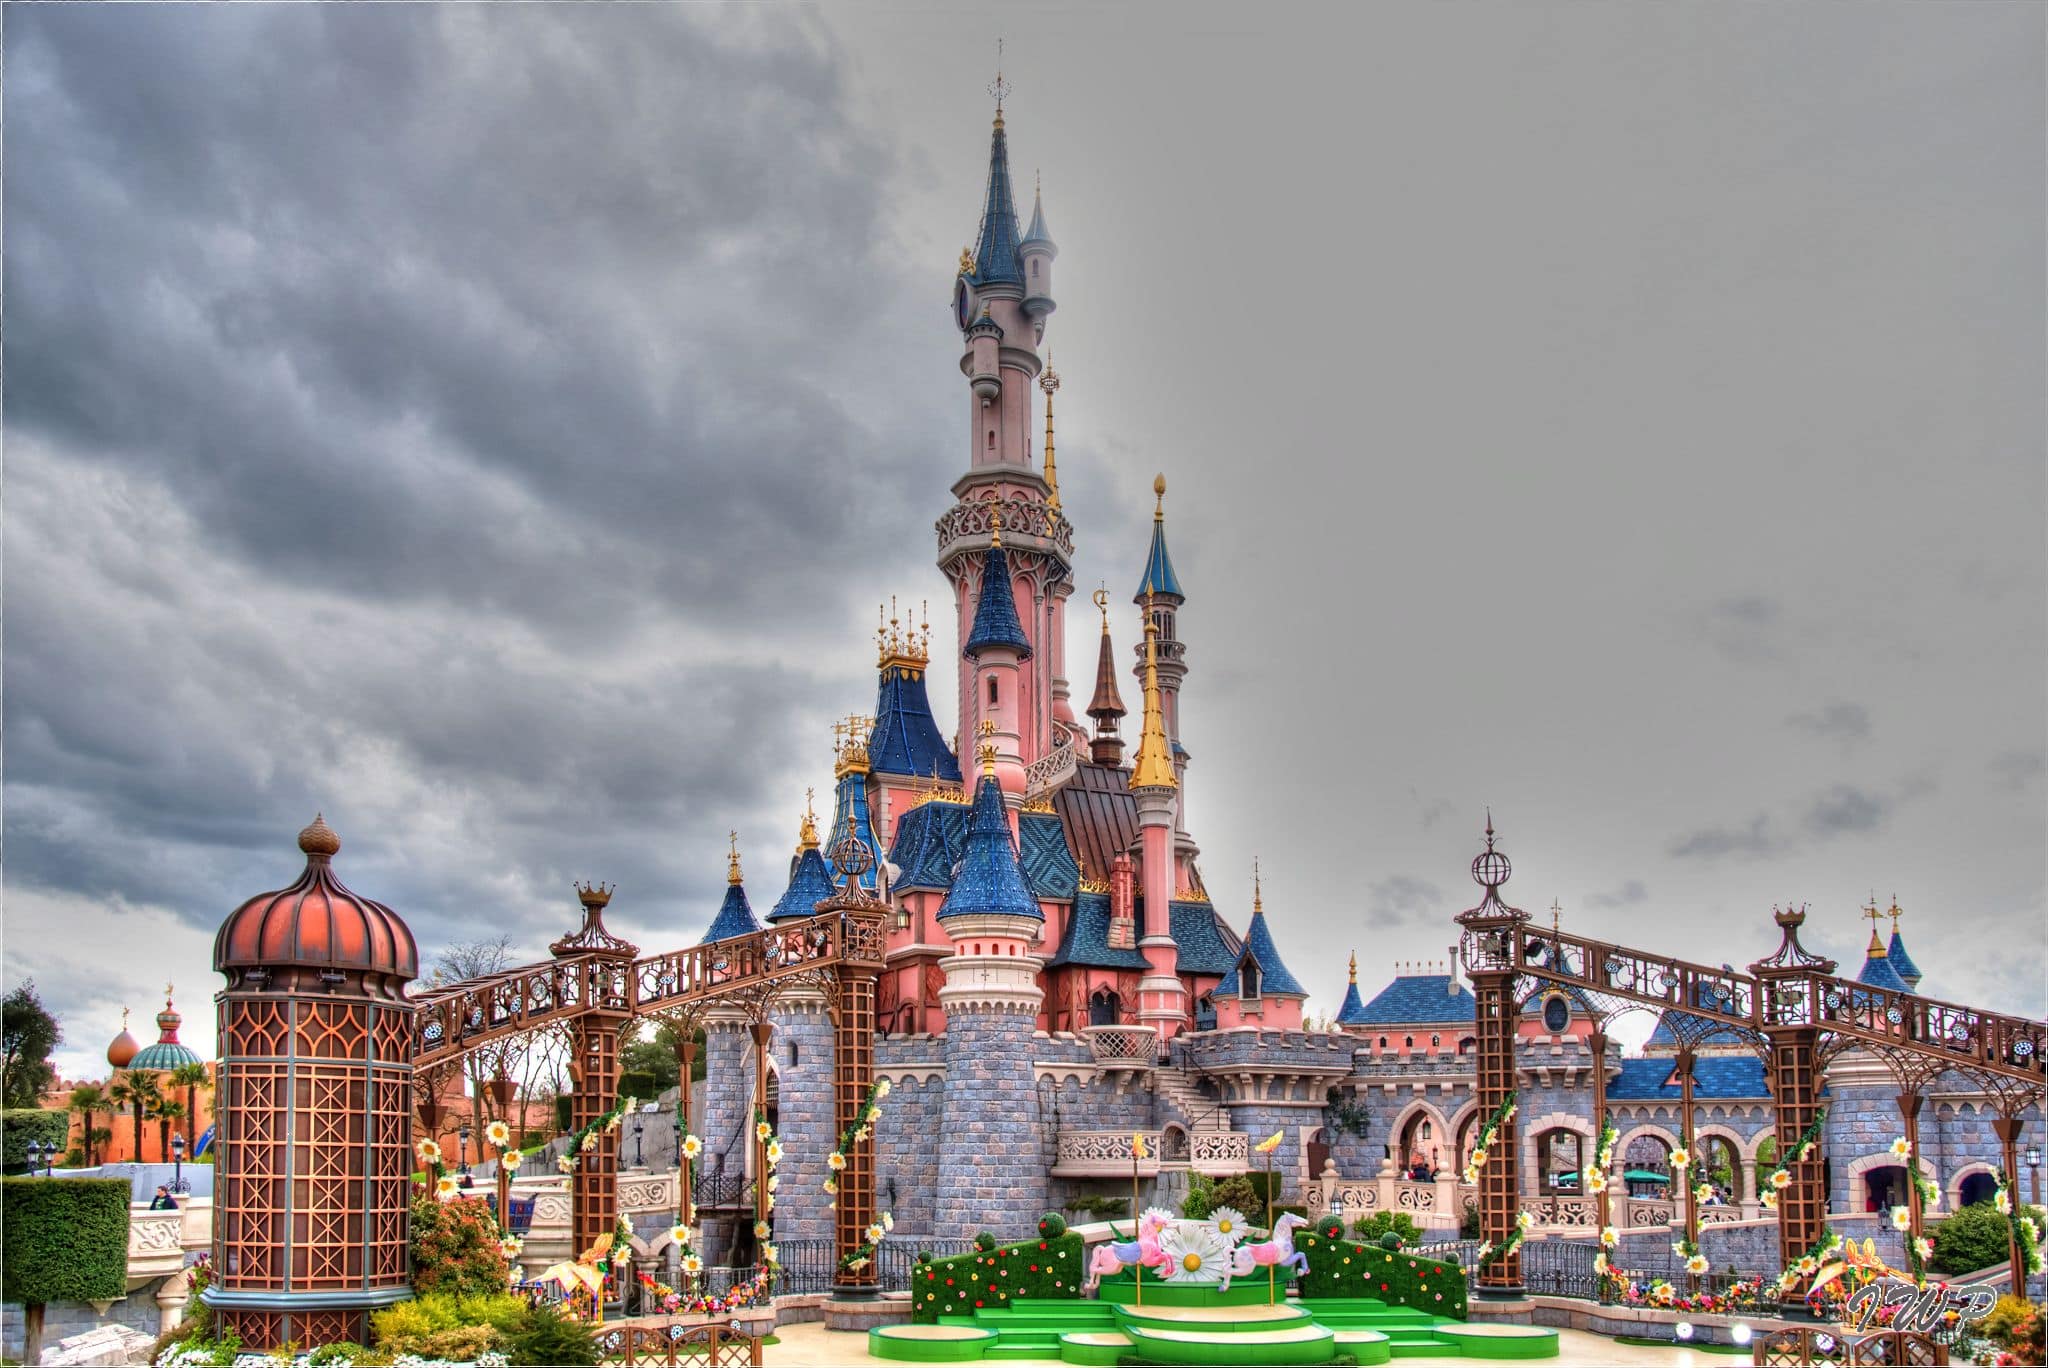 Autocarros Orly - Disneyland Paris - Magical Shuttle